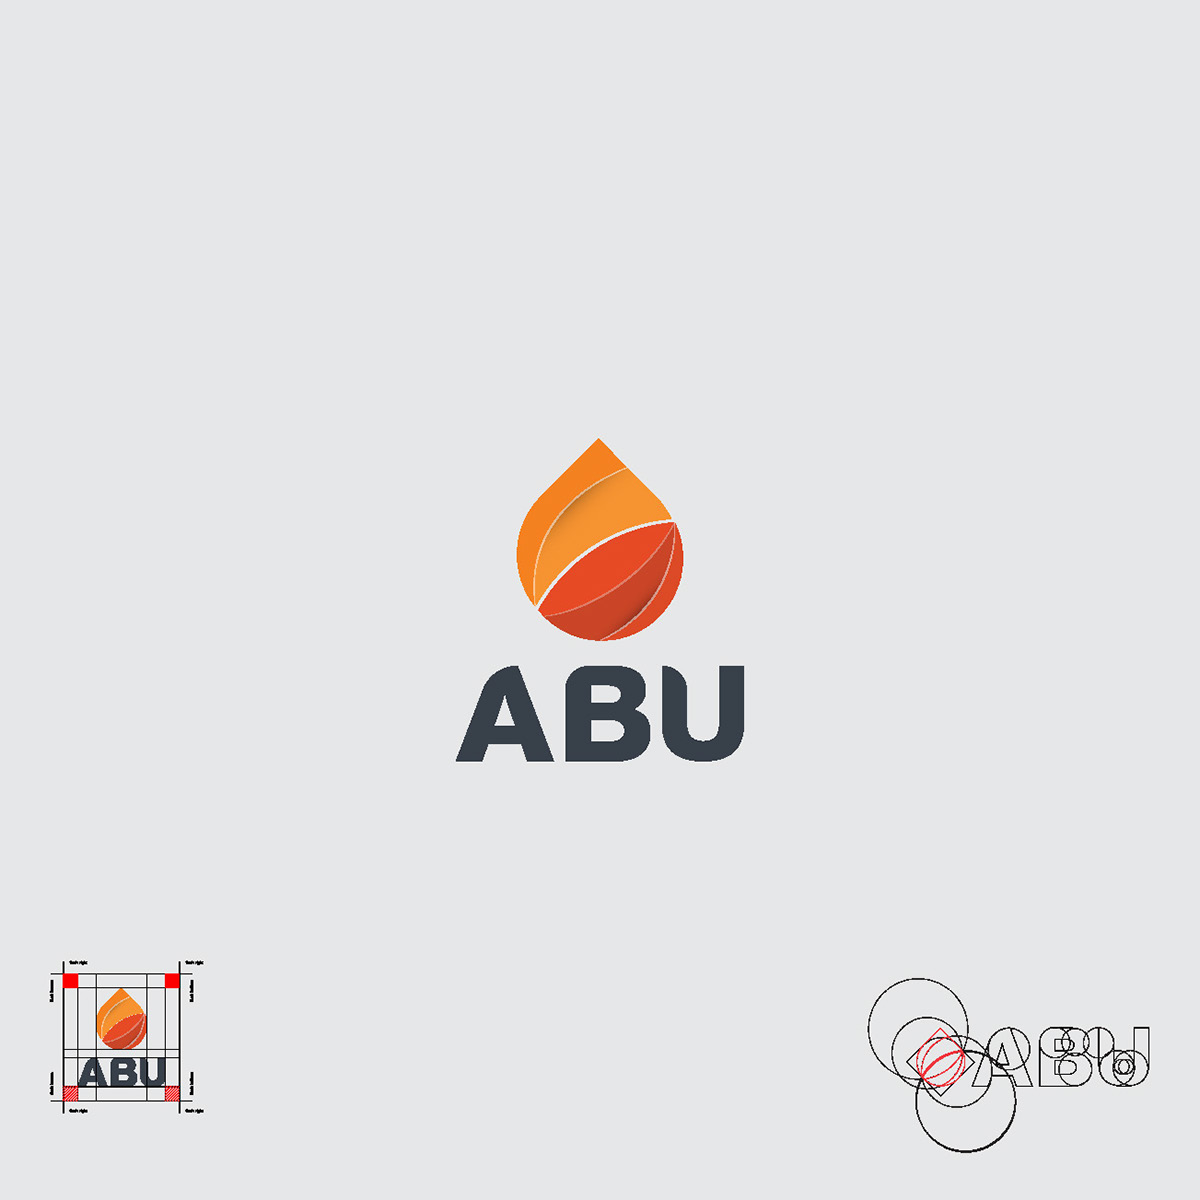 petrol oil logo baku azerbaijan fuel STATION abu abupetrol